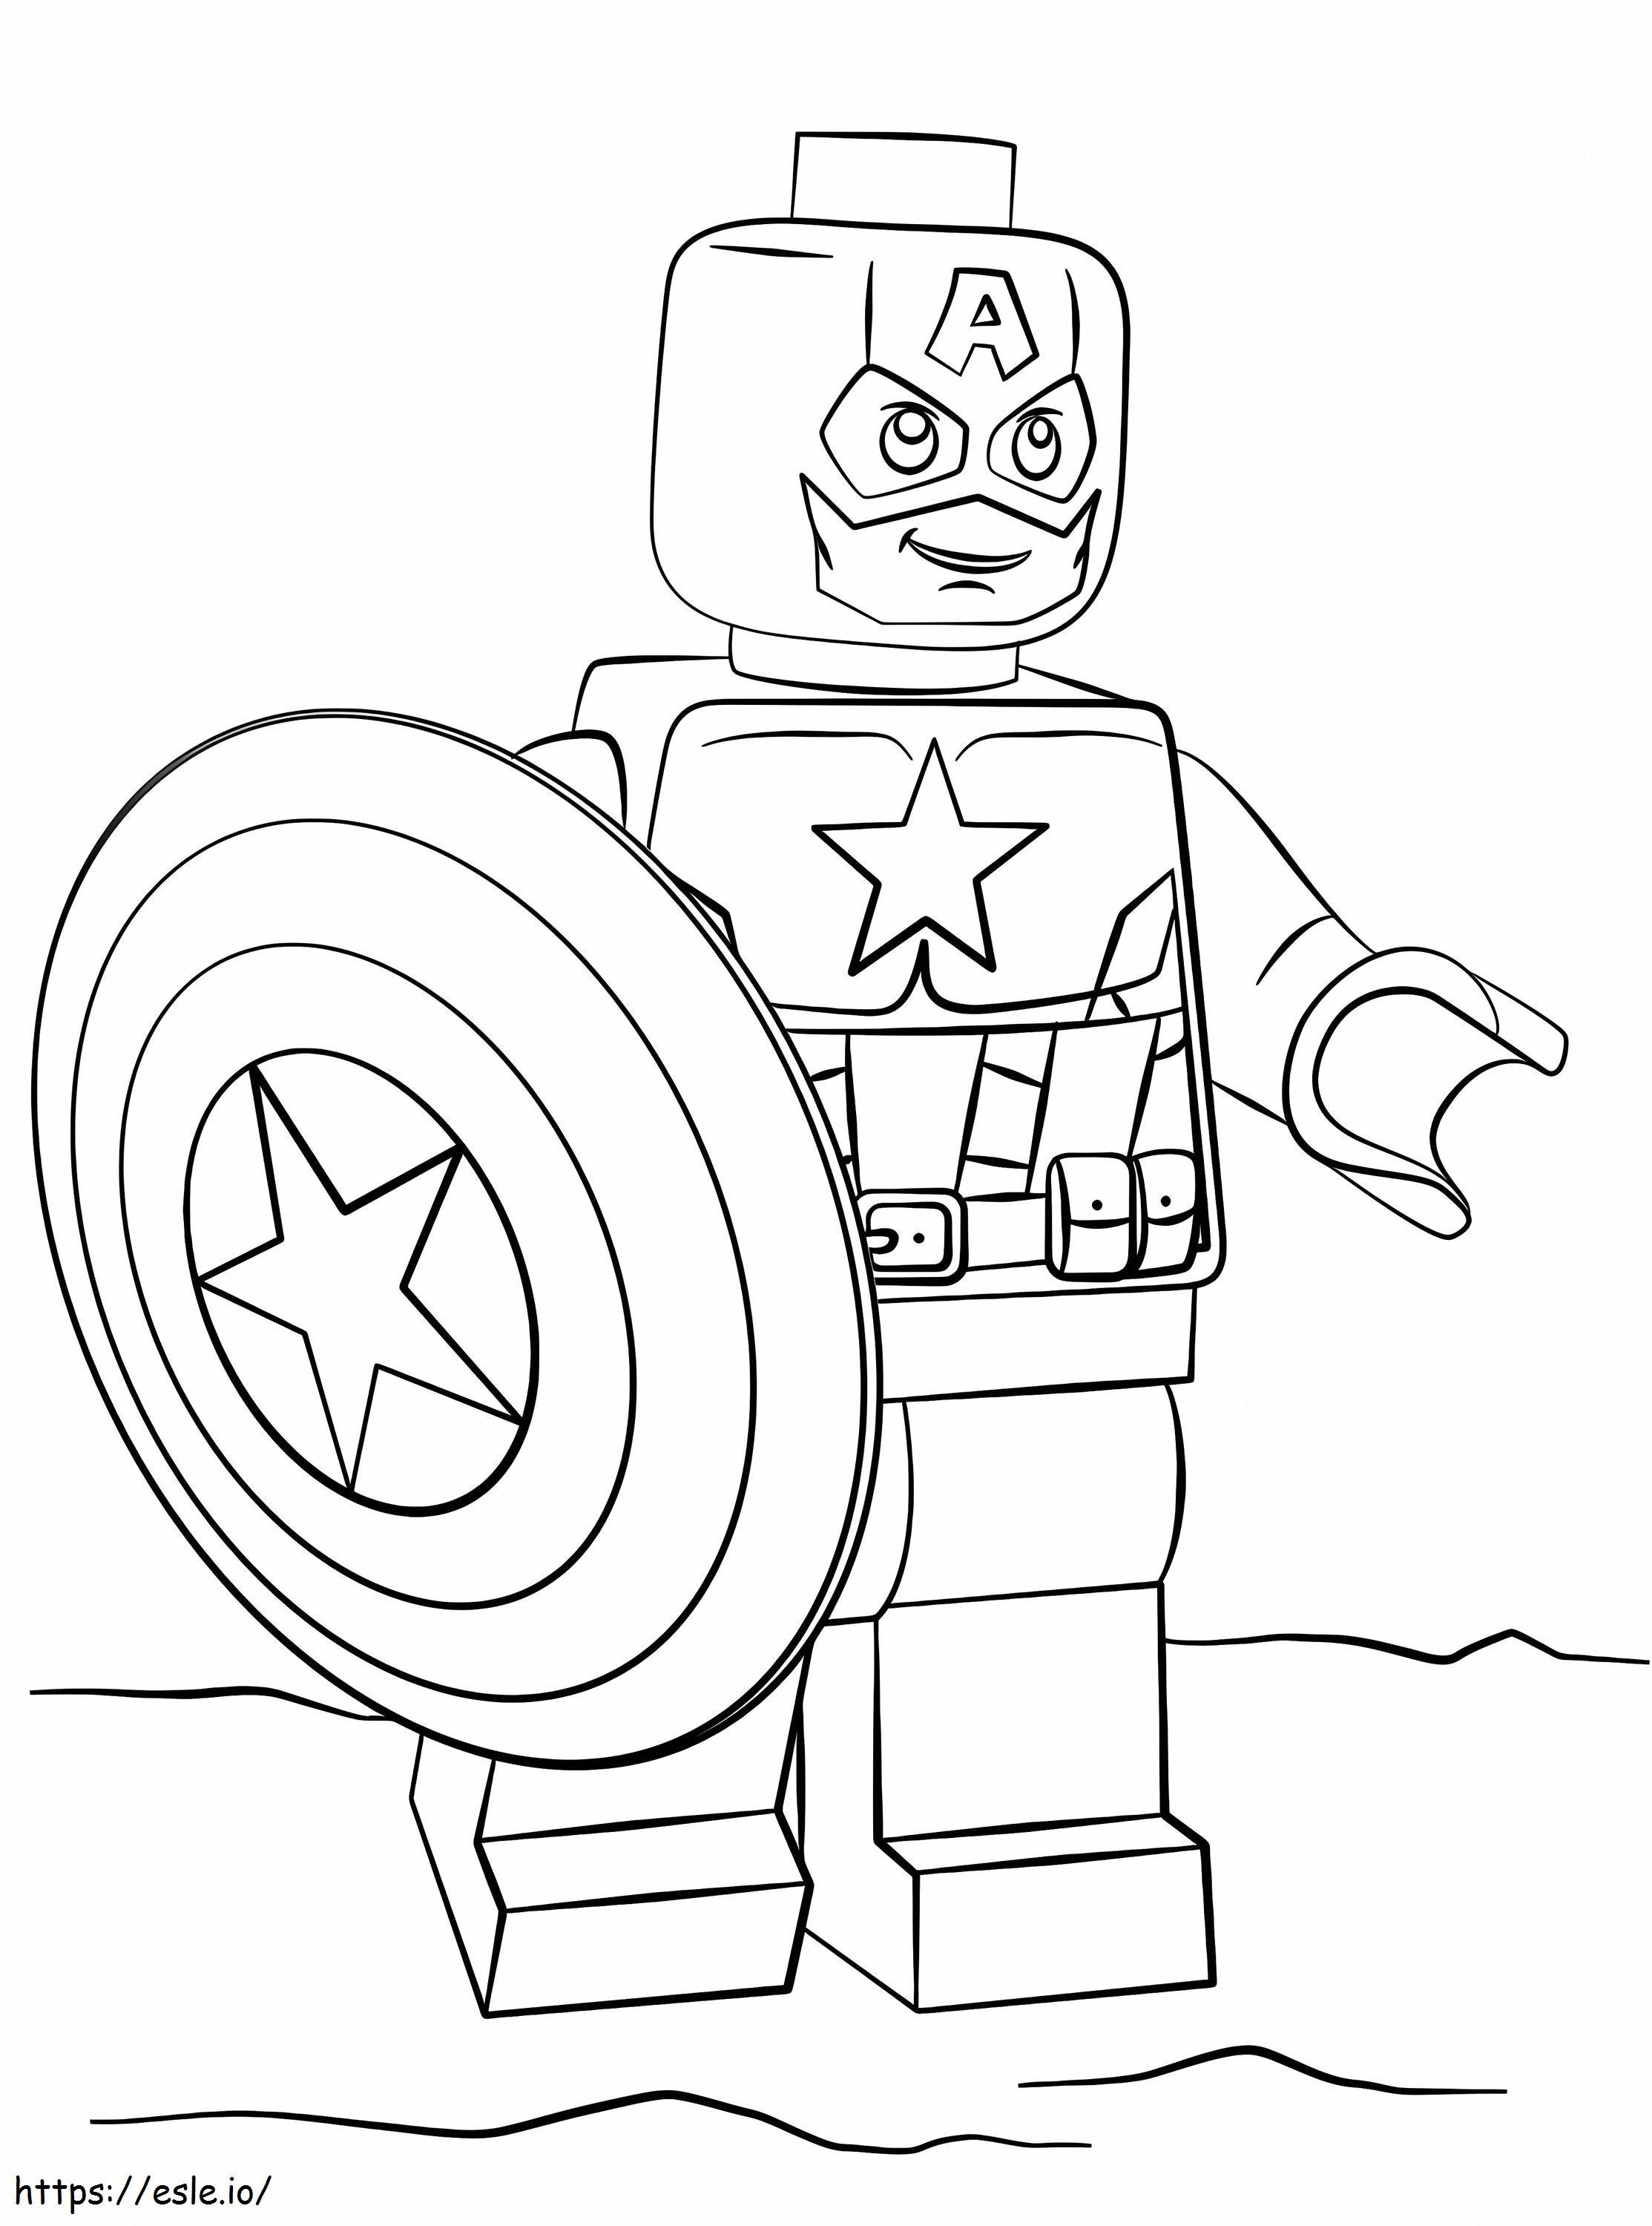 Coloriage _Lego Captain America A4 à imprimer dessin